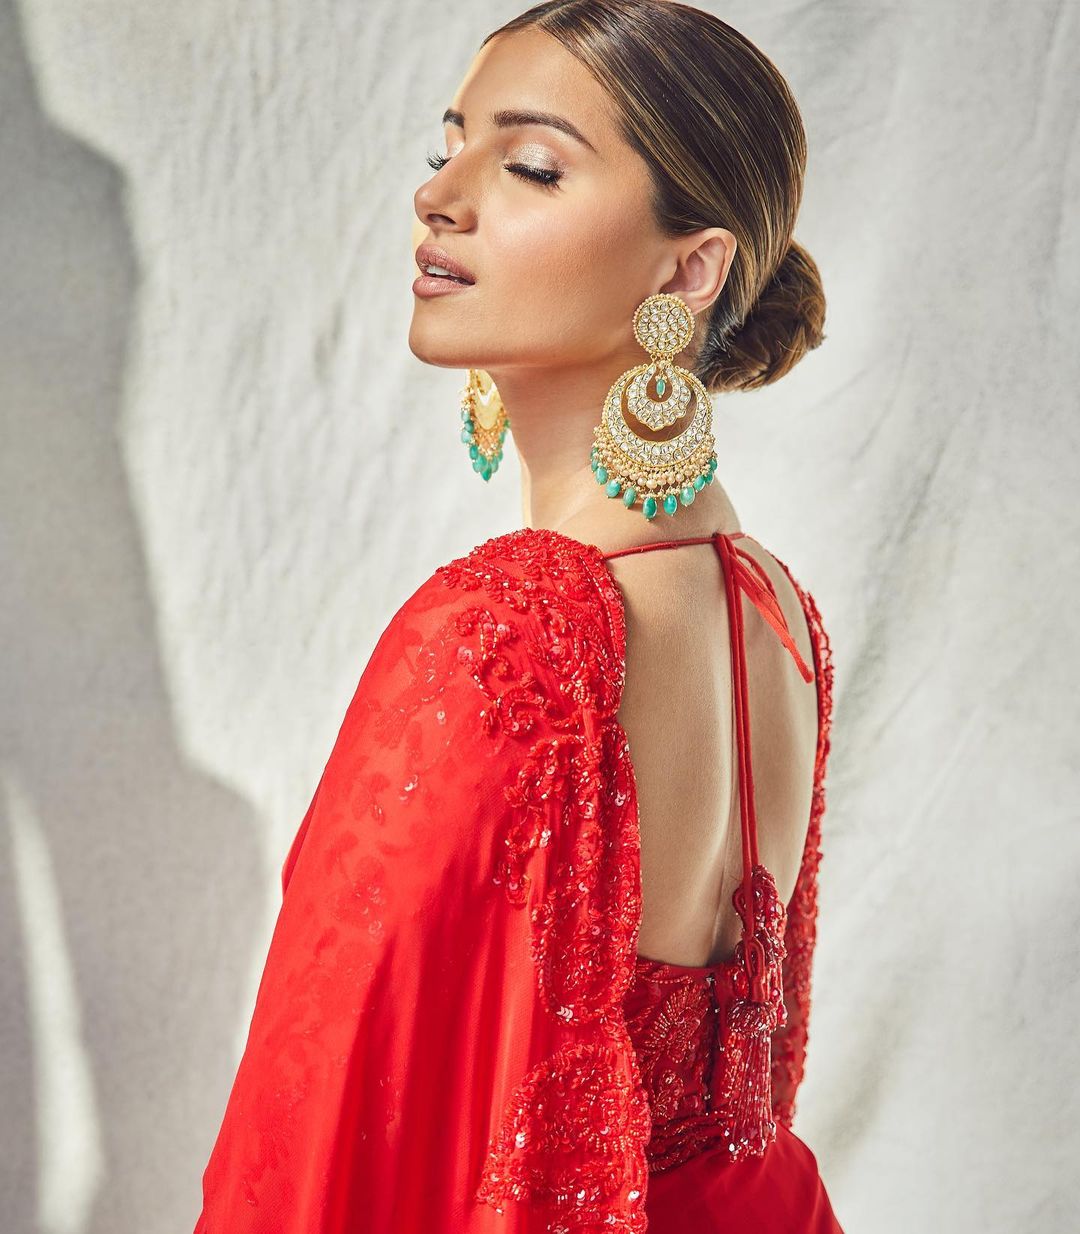 Tara Sutaria wears an exquisite chaandbali earrings